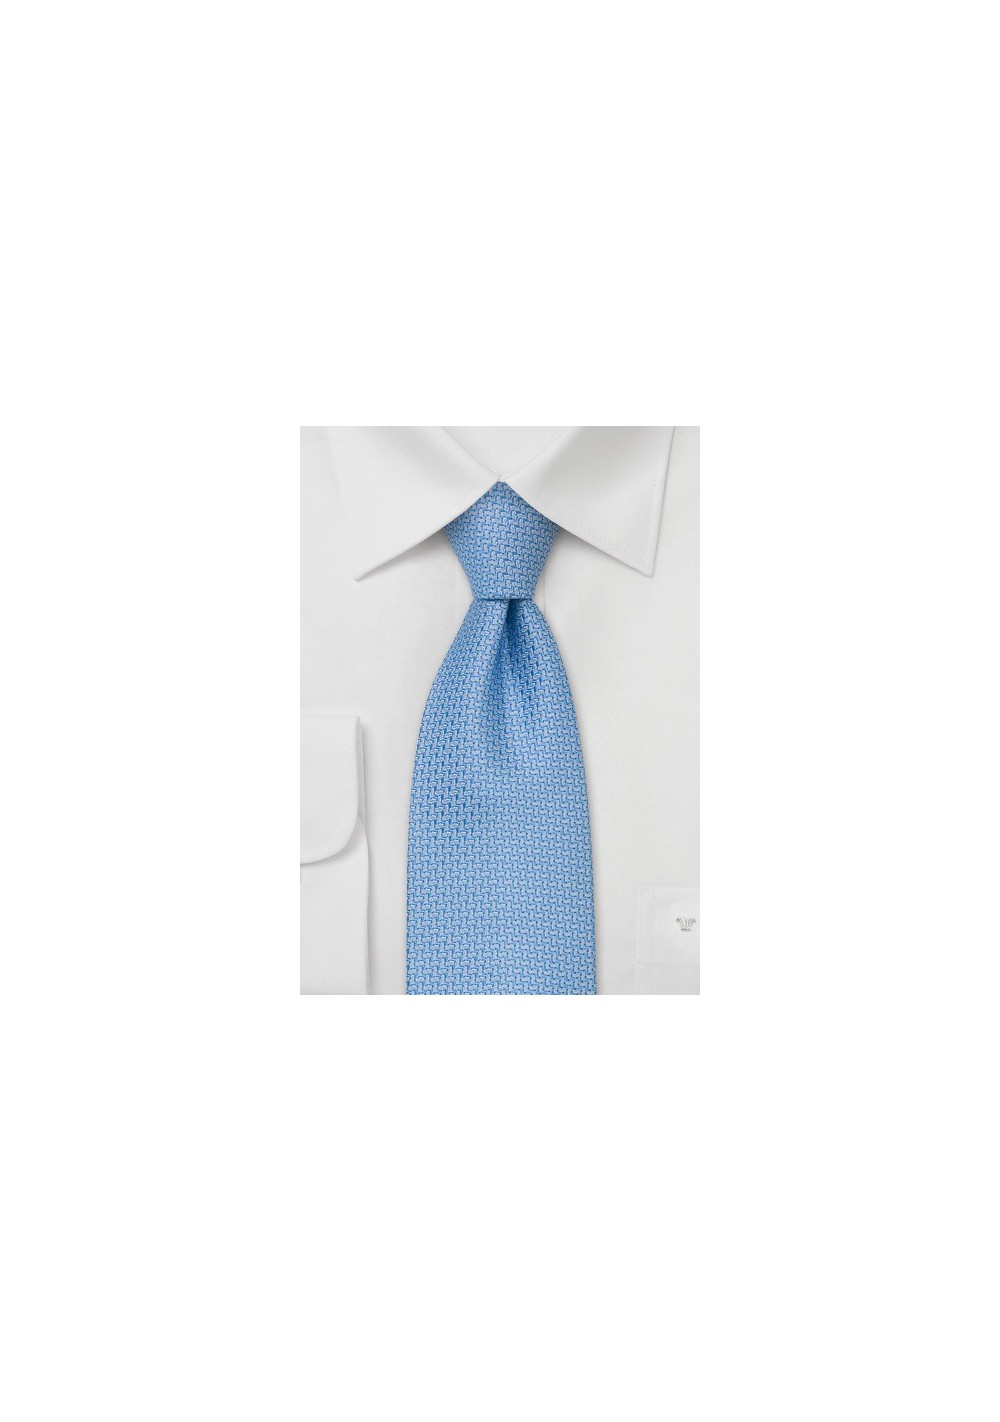 Extra Long Ties - XL Designer Tie by Chevalier